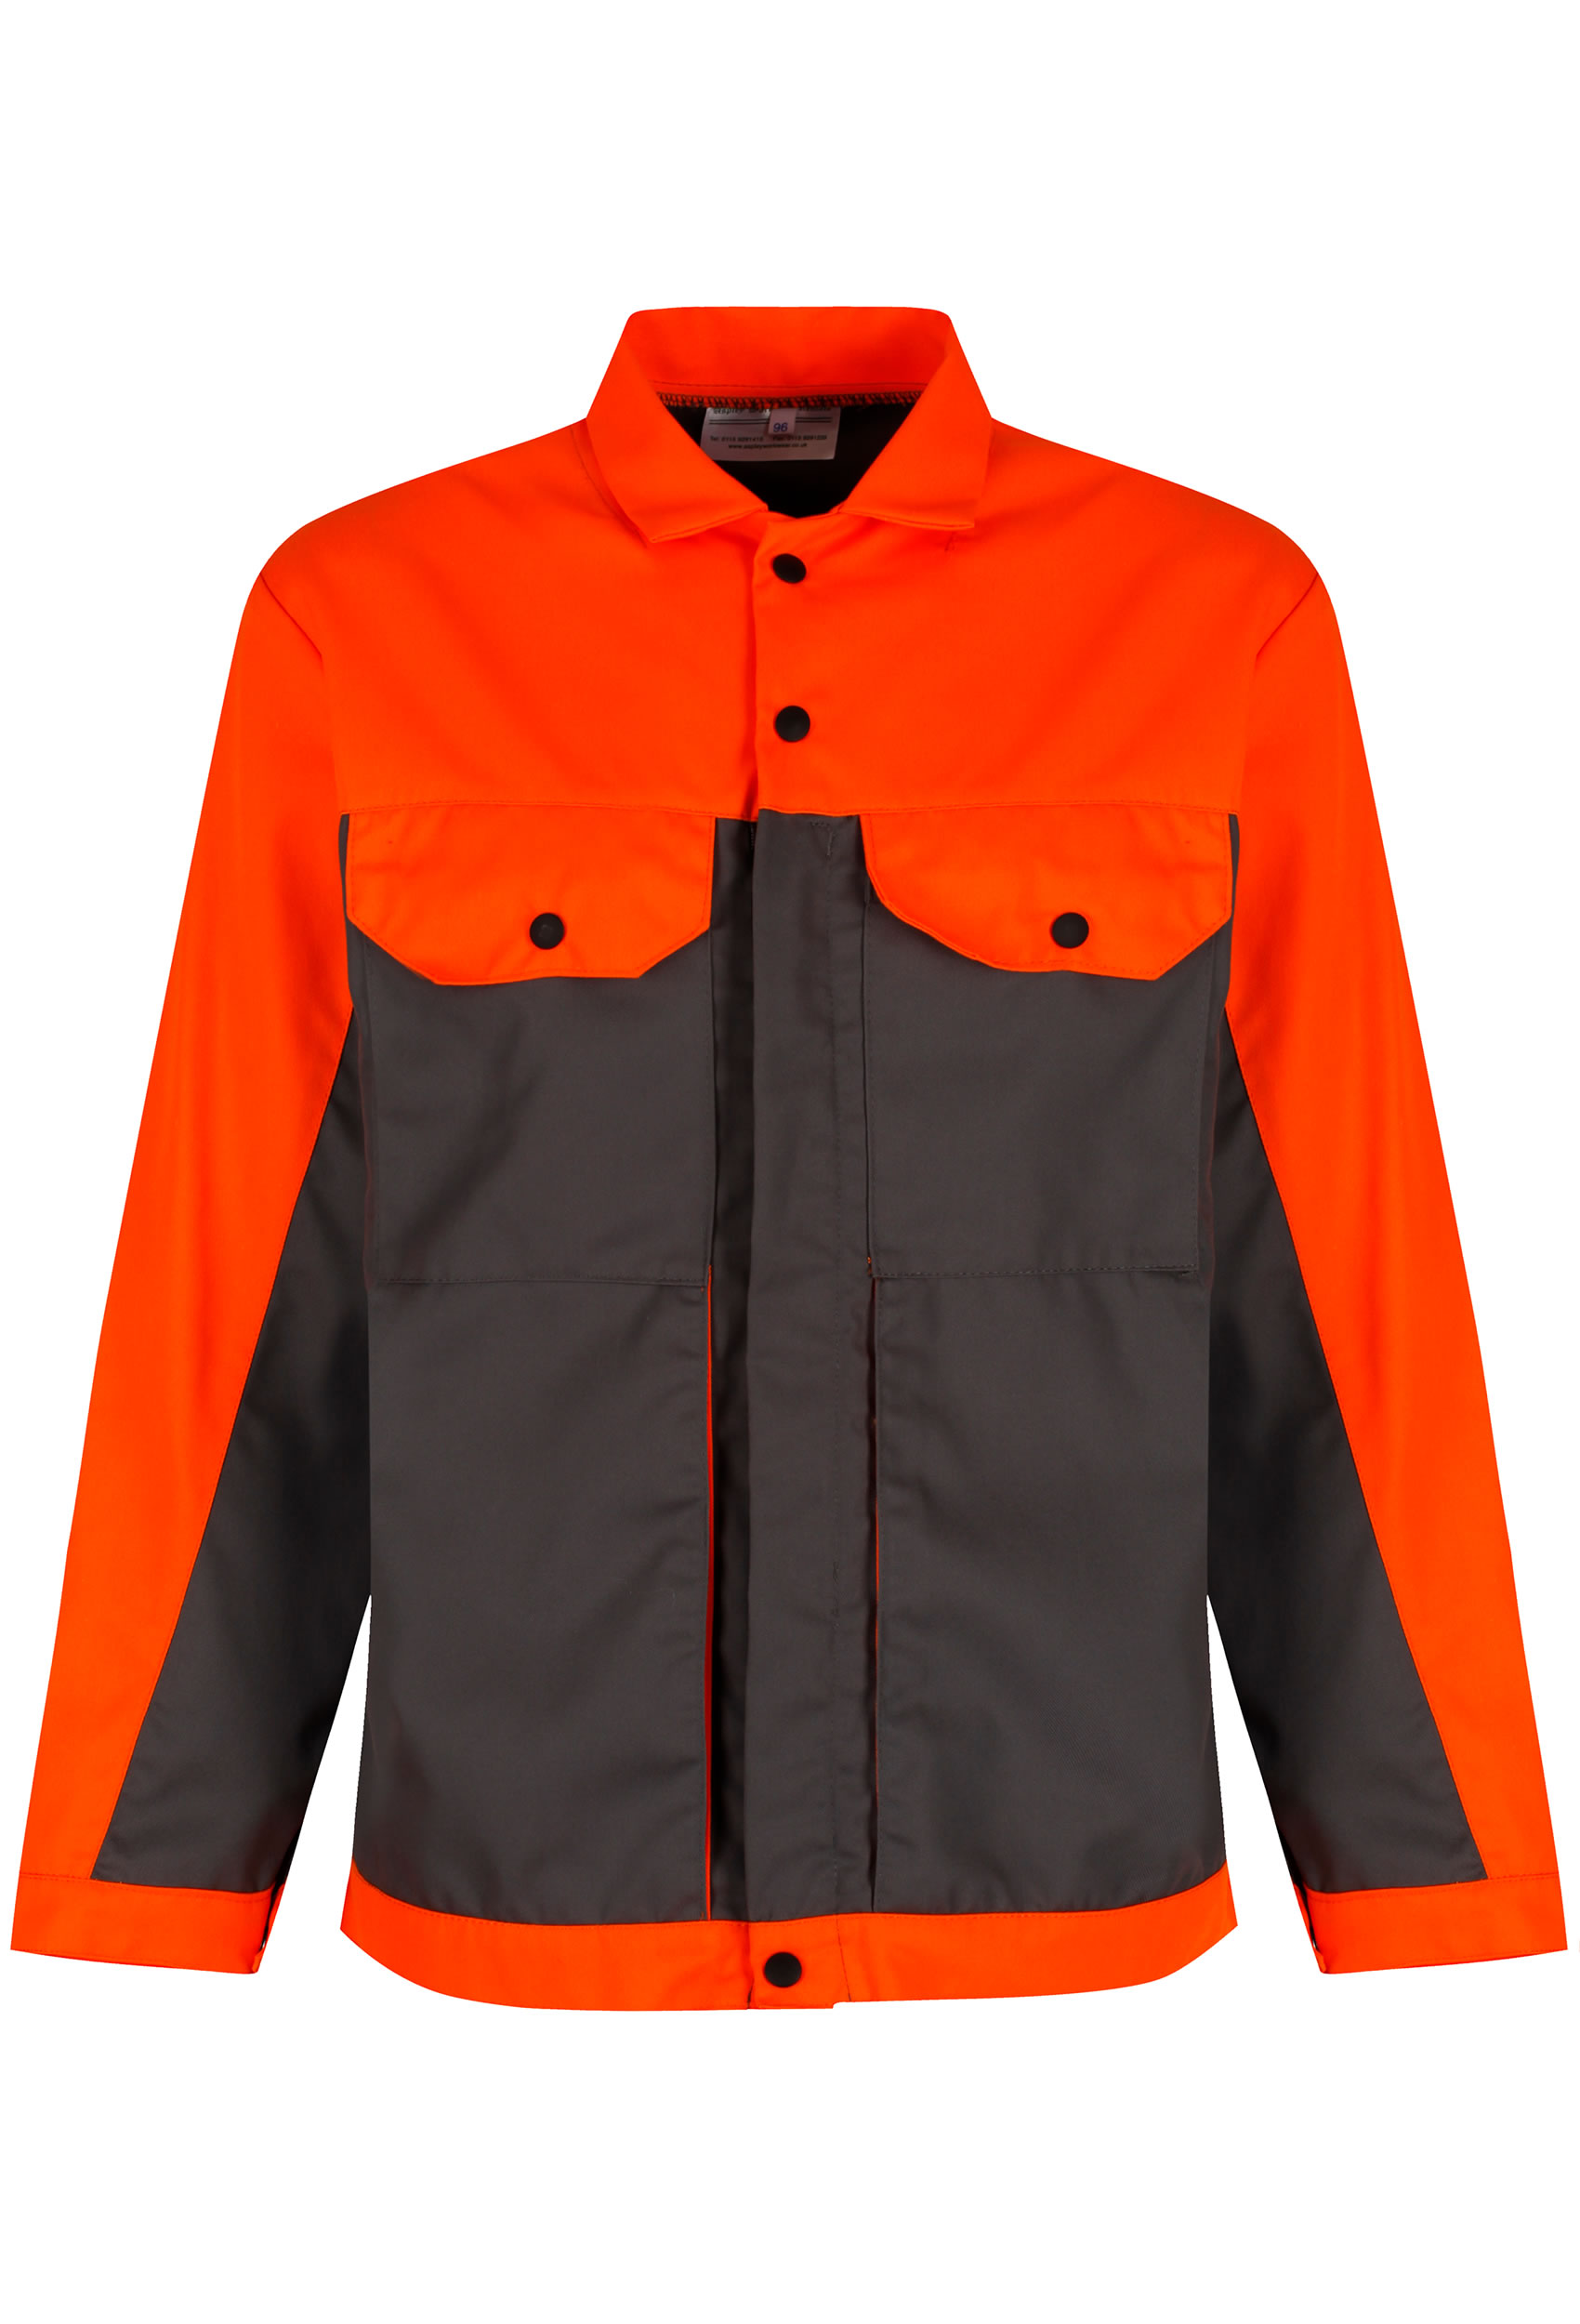 Style 4784 Two-tone flame retardant jacket.jpg - Workwear Garments - CLEAN Services